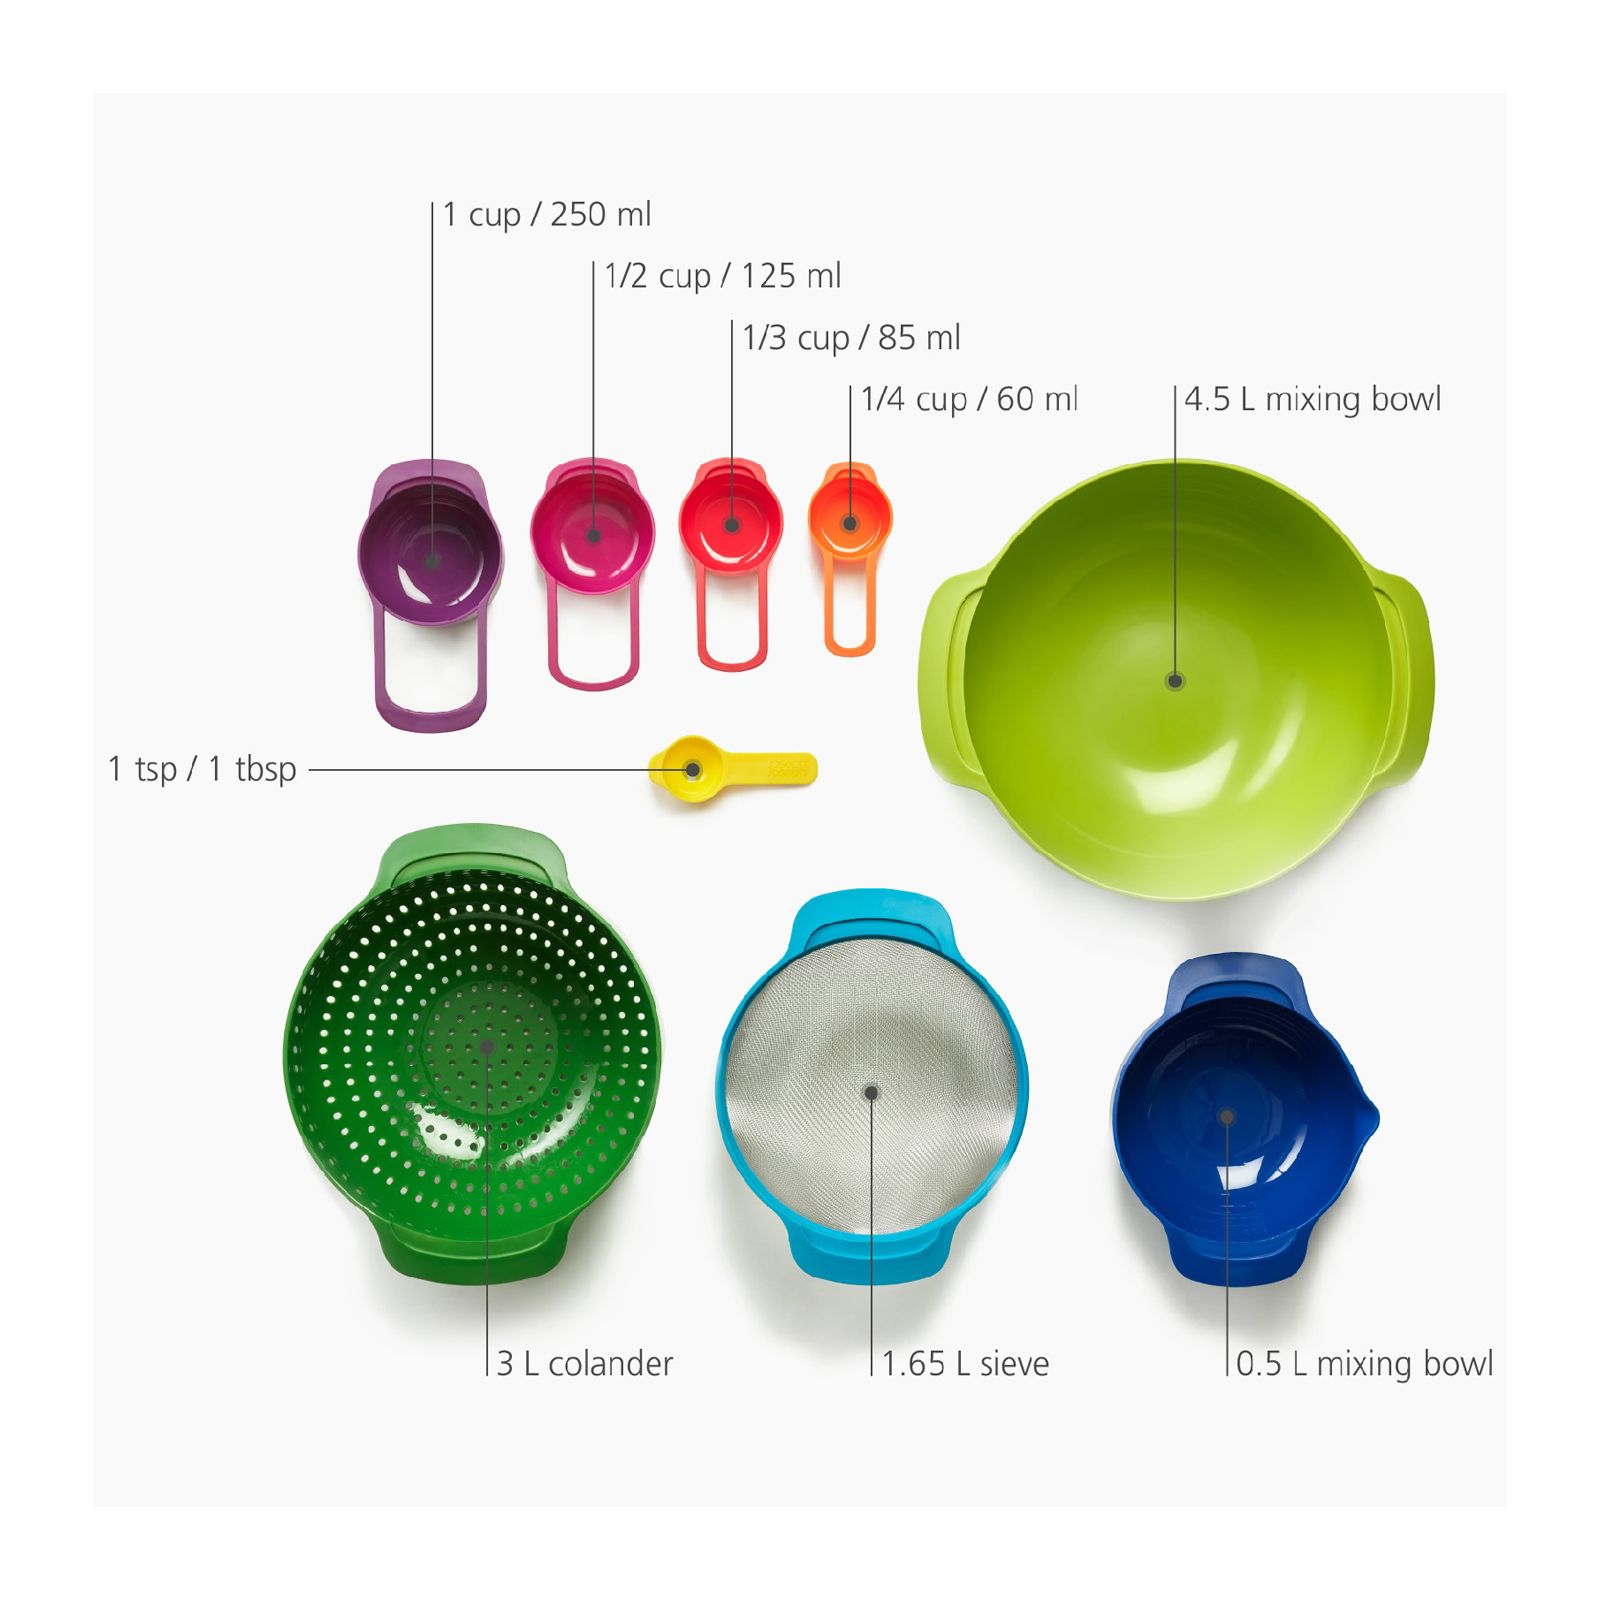 Joseph Joseph Go-to Gadgets 2-piece Food Preparation Set - Multicolour 